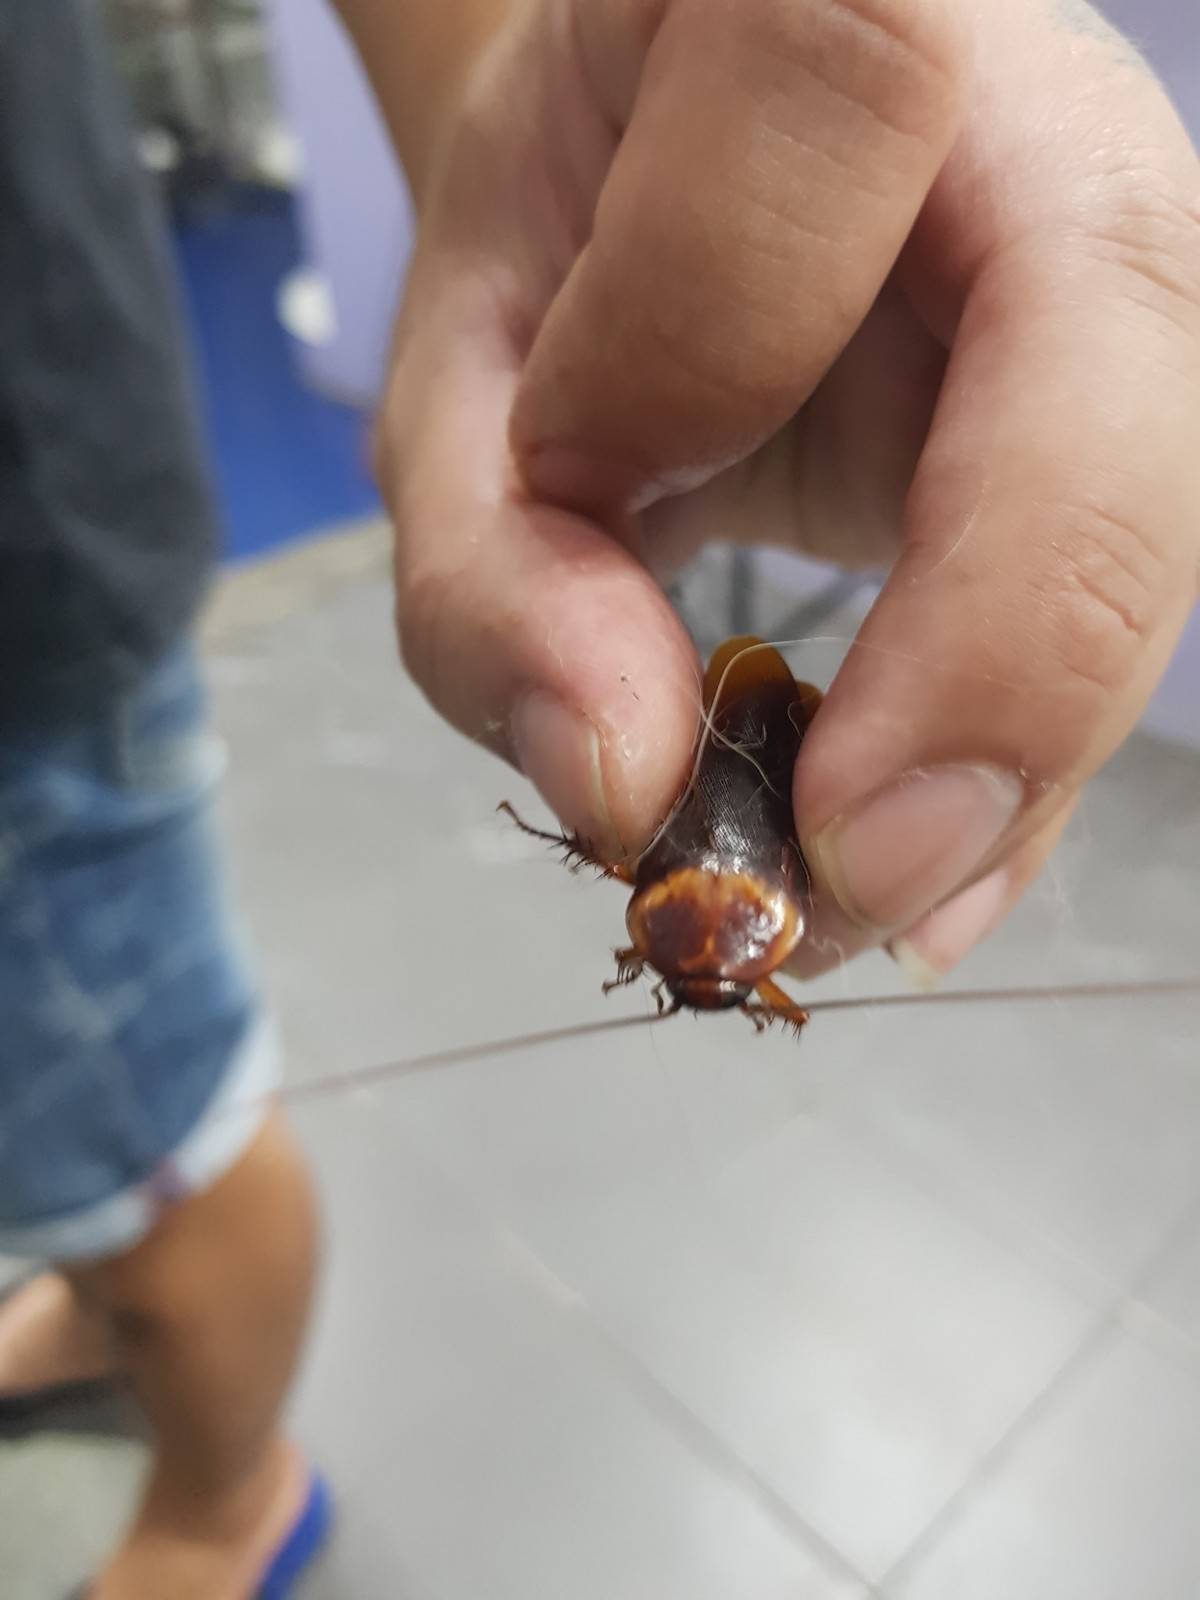 Cucaracha, WTF